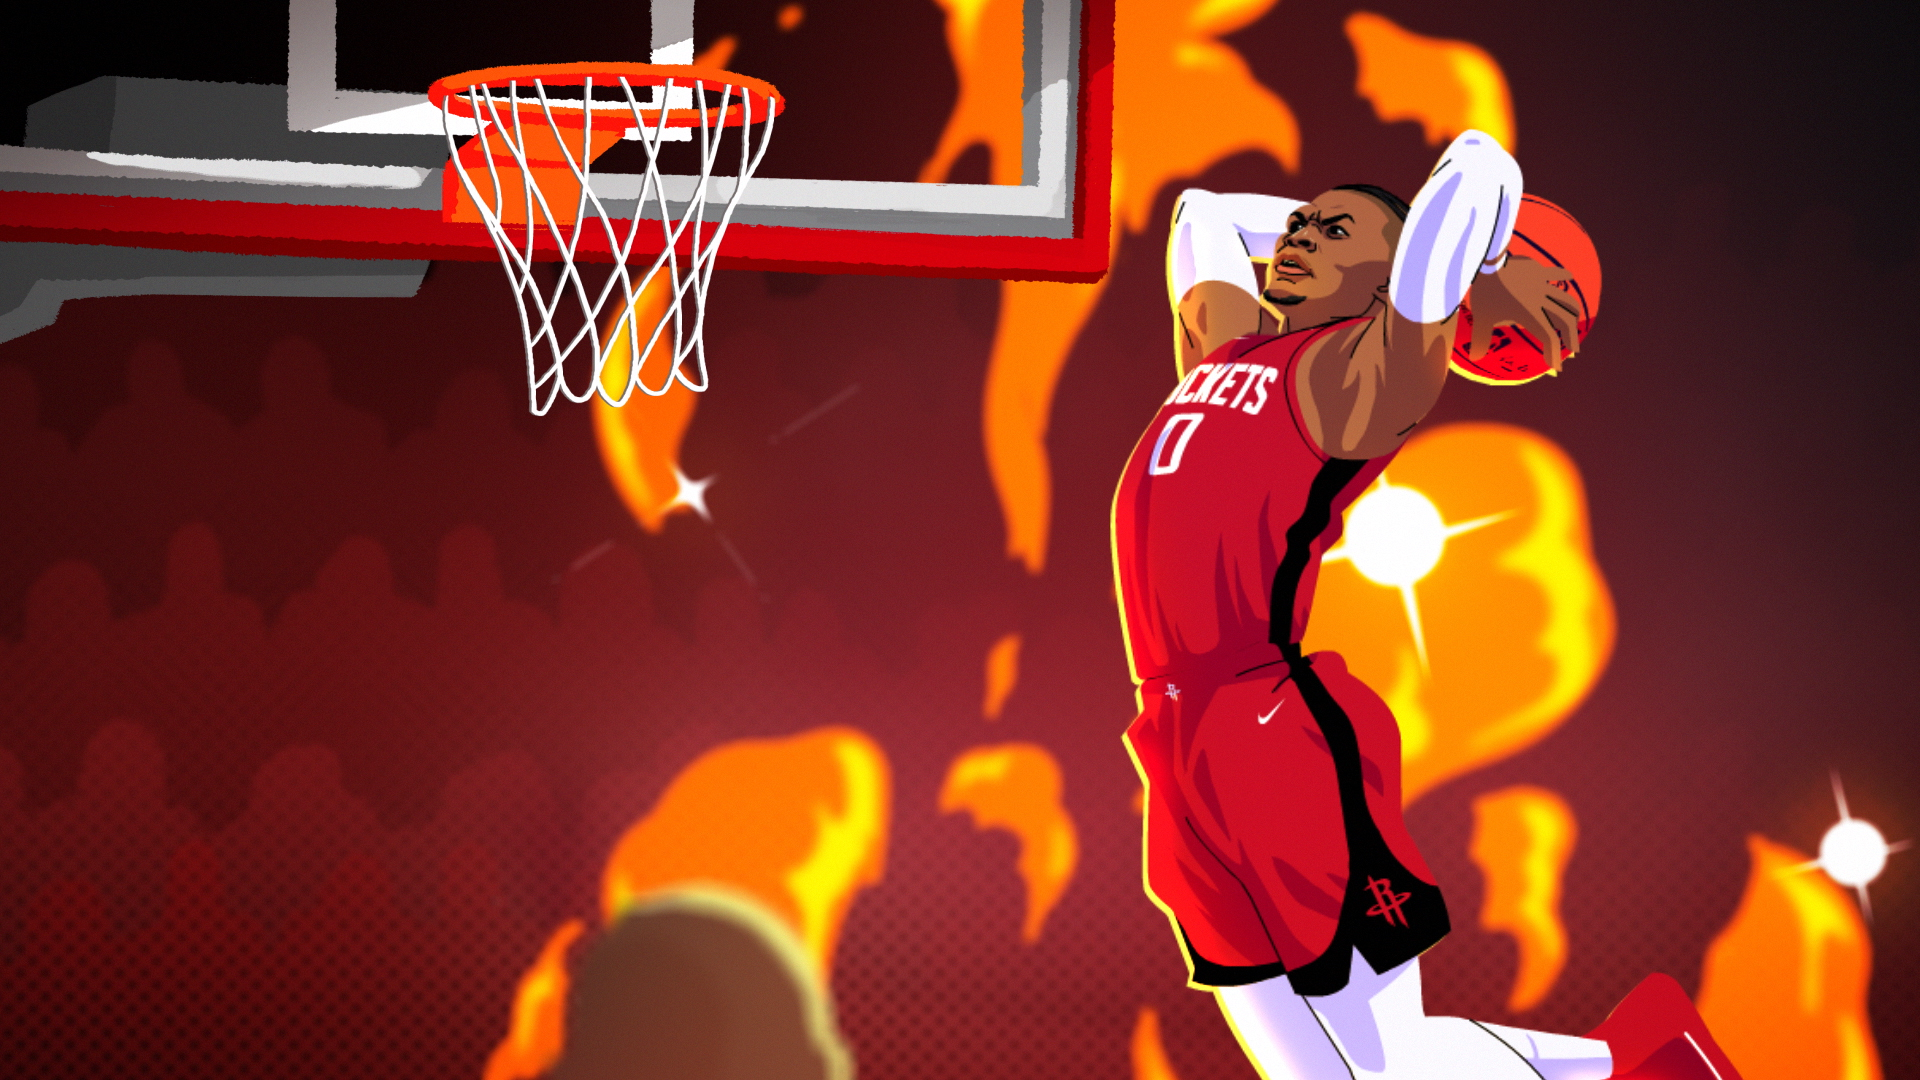 Basketball Player Animation Basketball Cartoon Player Dunking Ball